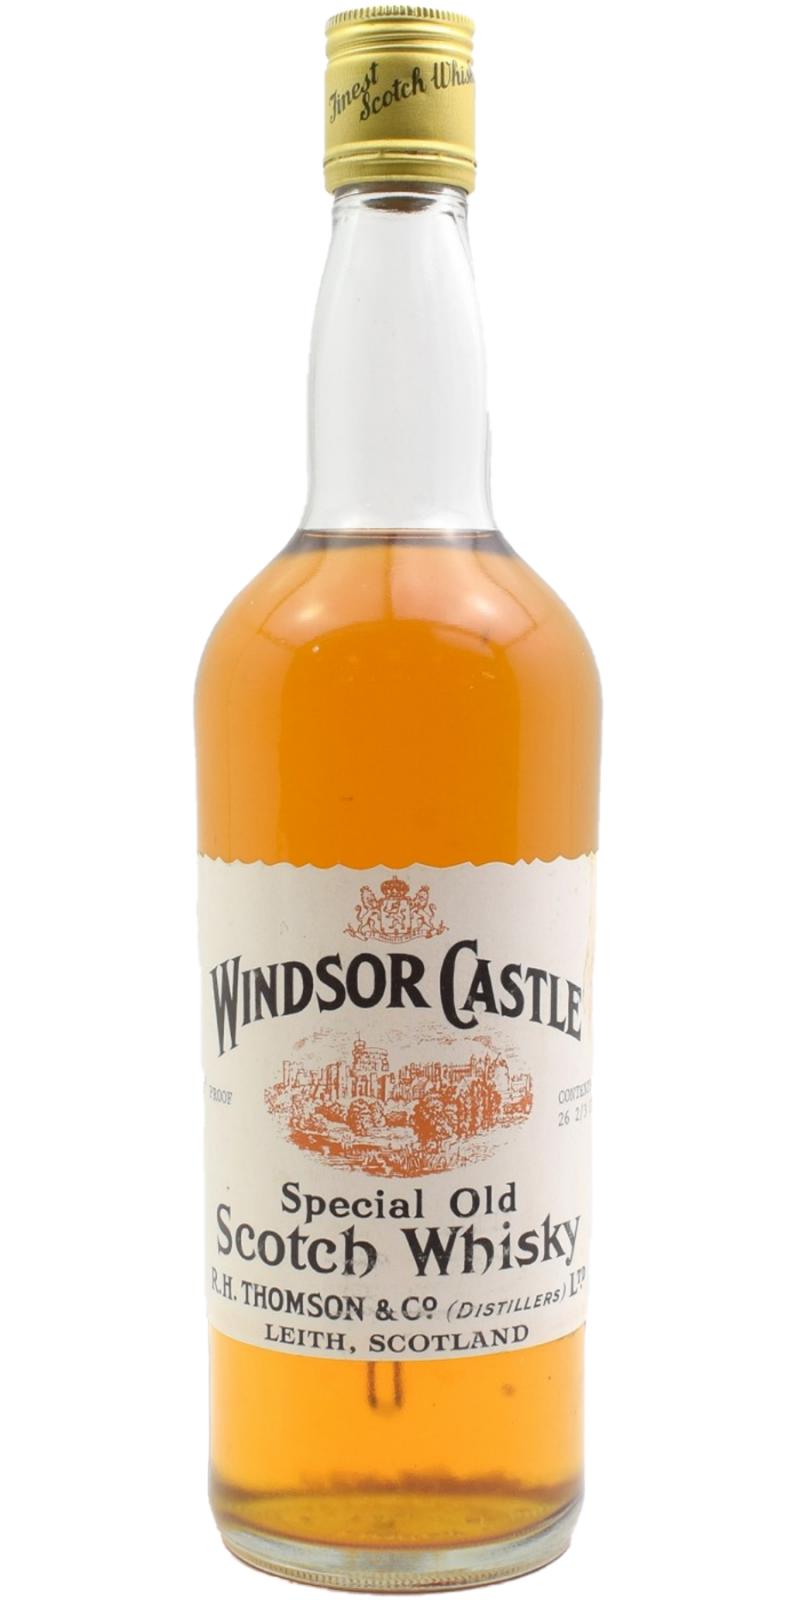 Windsor Castle Special Old Scotch Whisky